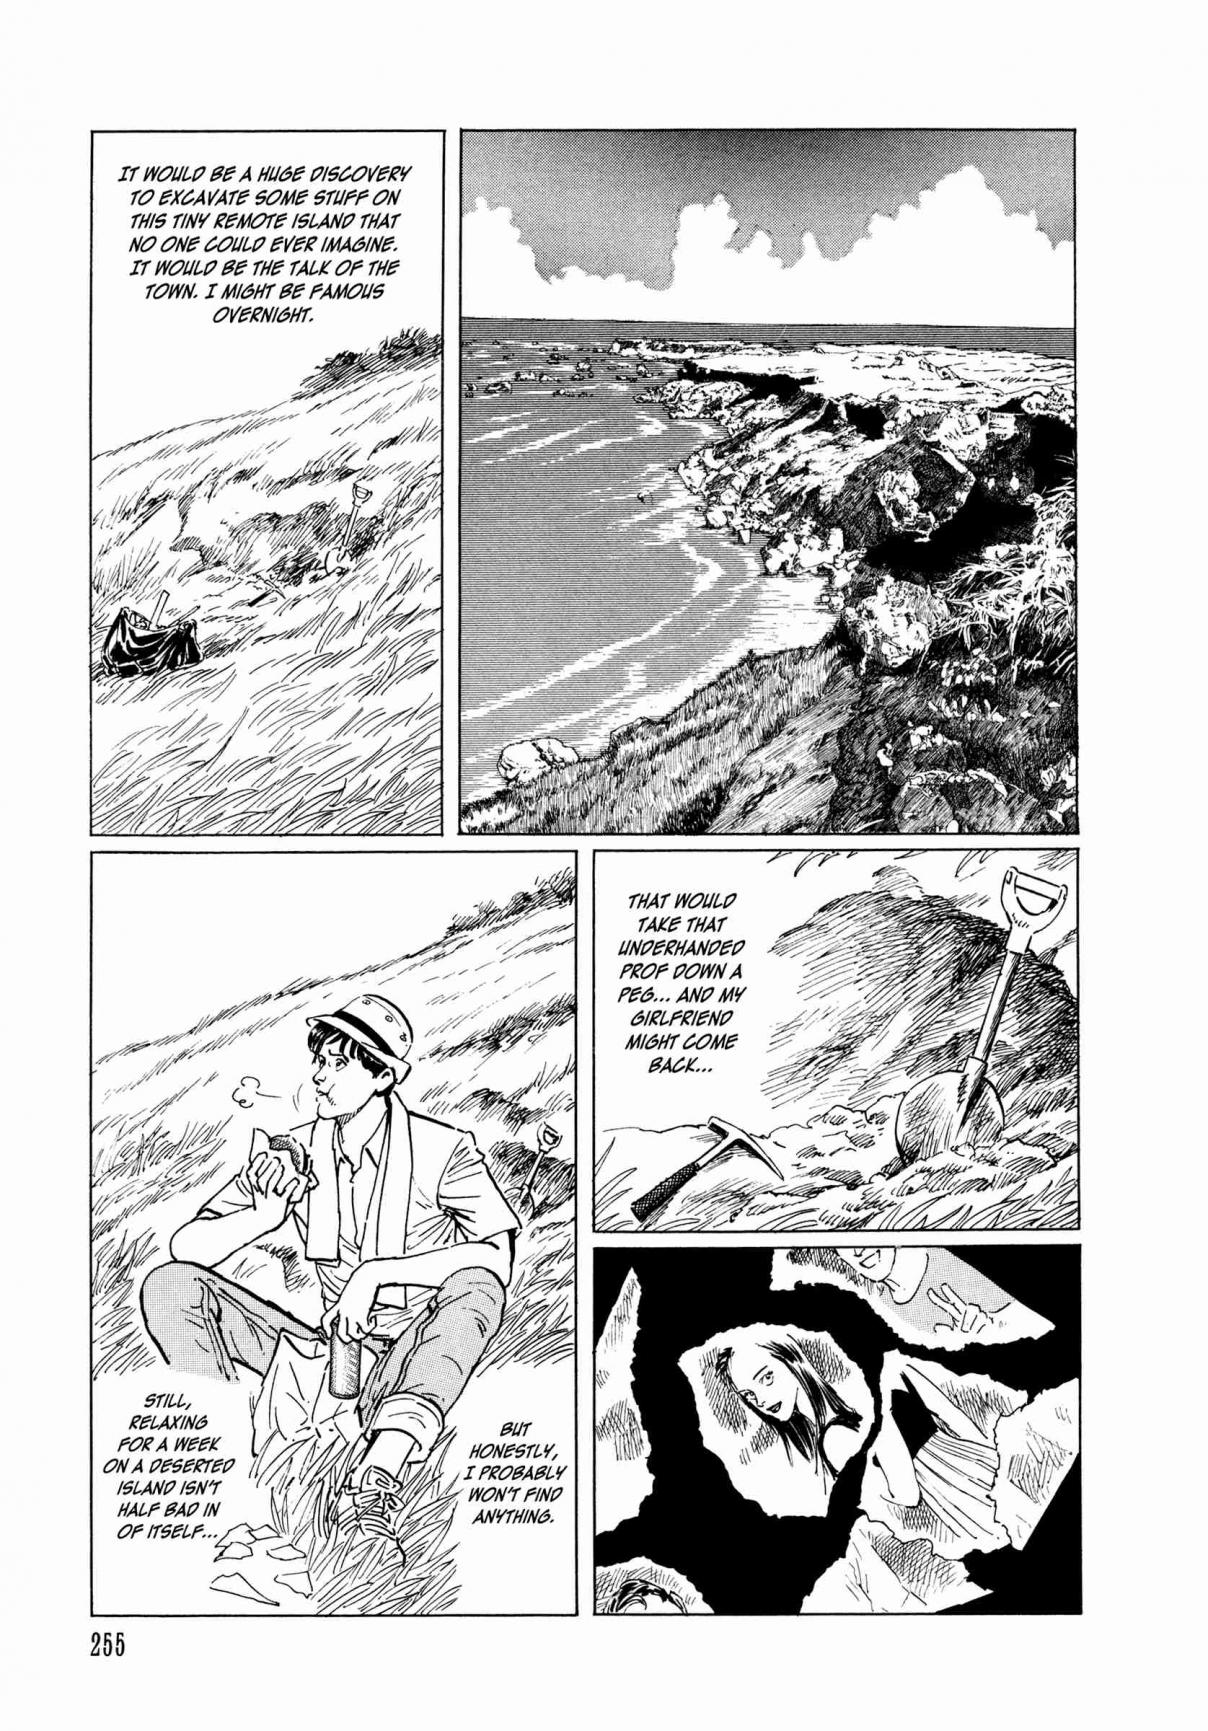 Chibiki no Iwa Vol. 1 Ch. 6 The Earthen Woman